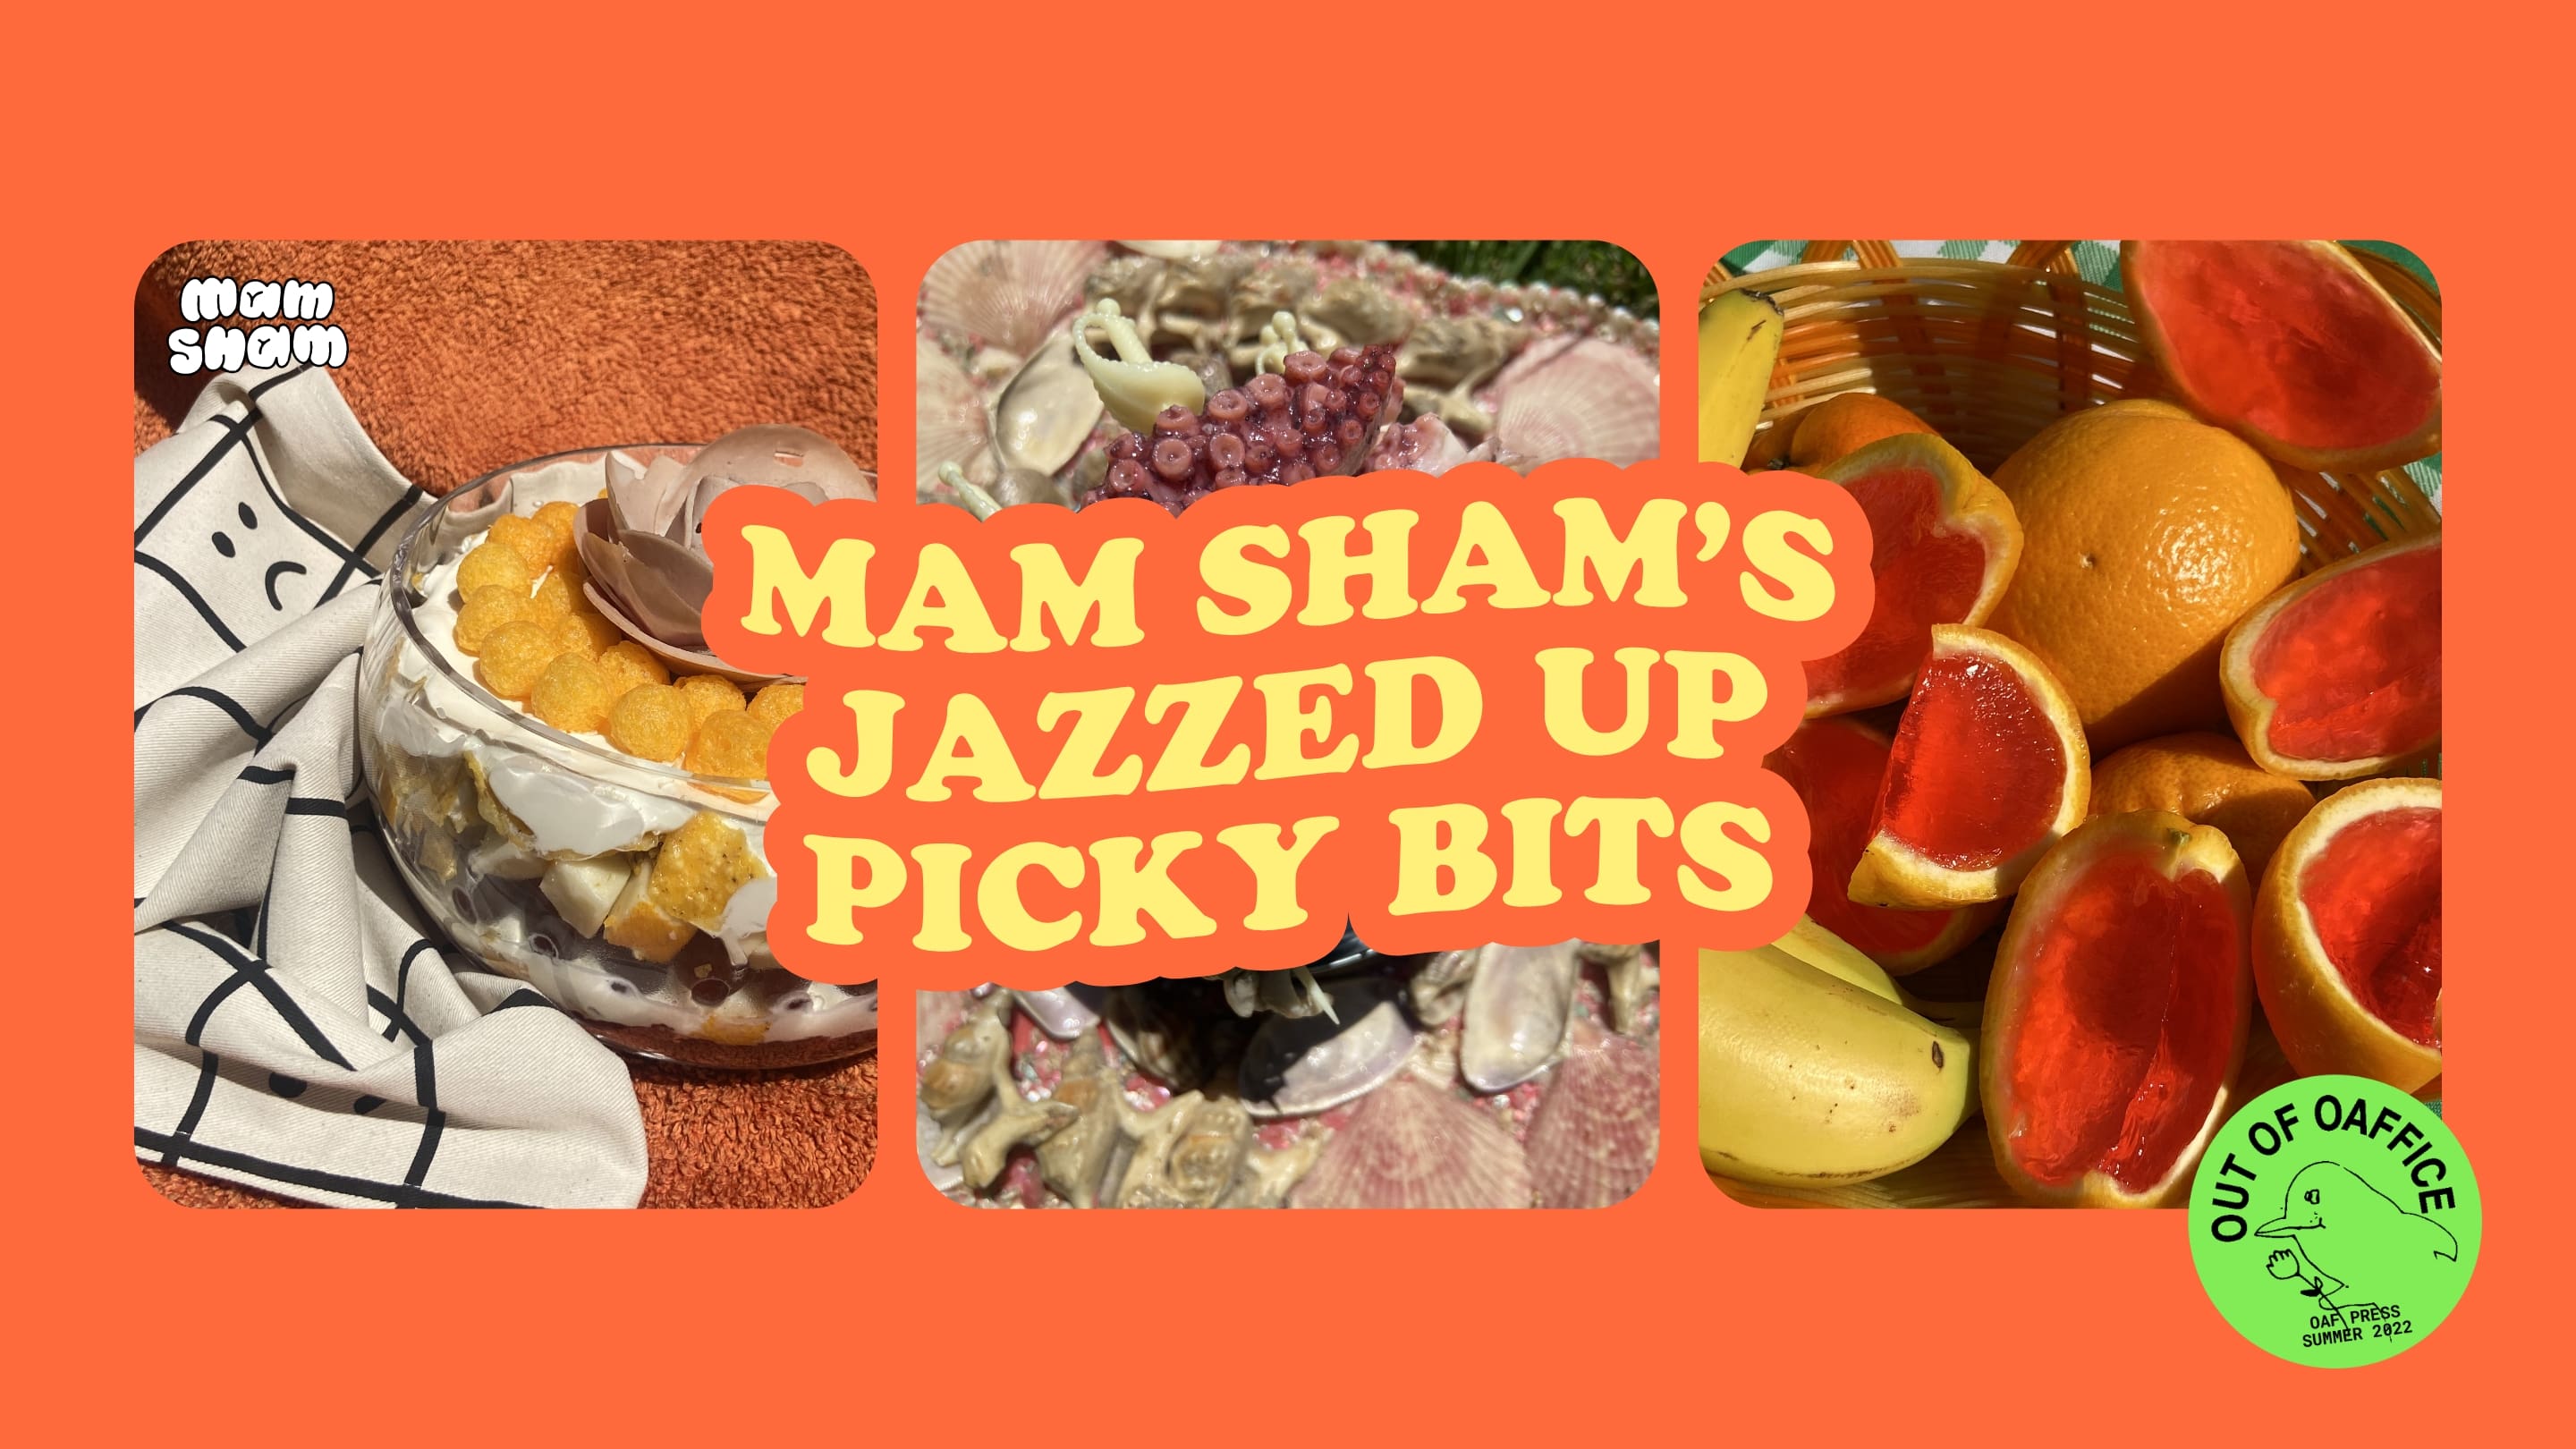 MAM SHAM’S JAZZED UP PICKY BITS